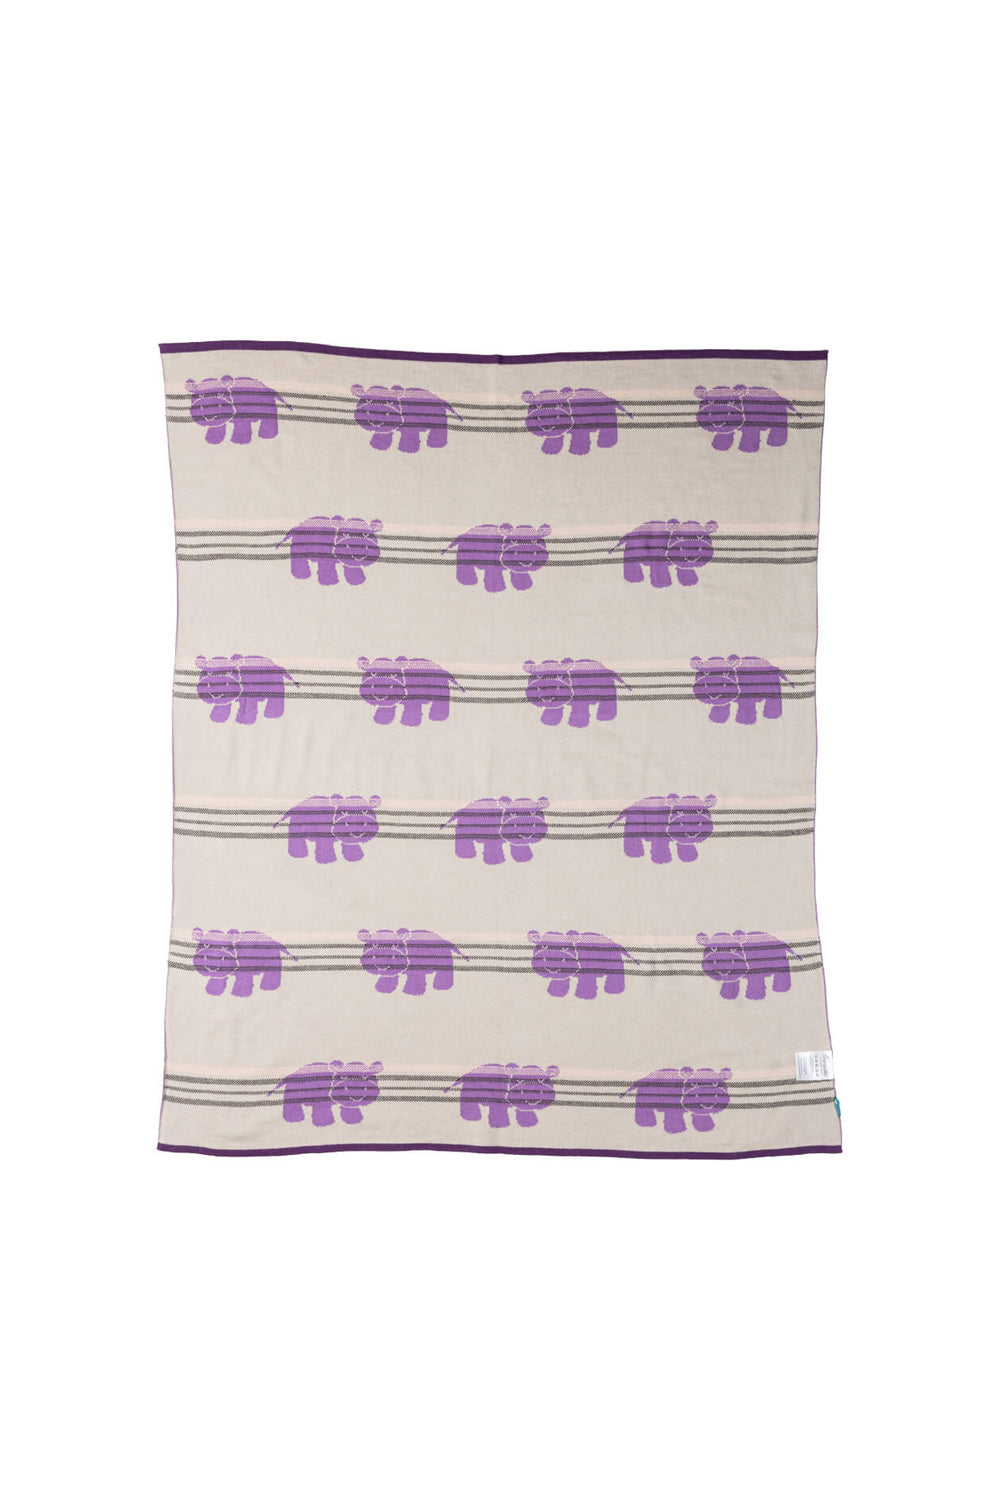 Baby Blanket in Purple Hippo